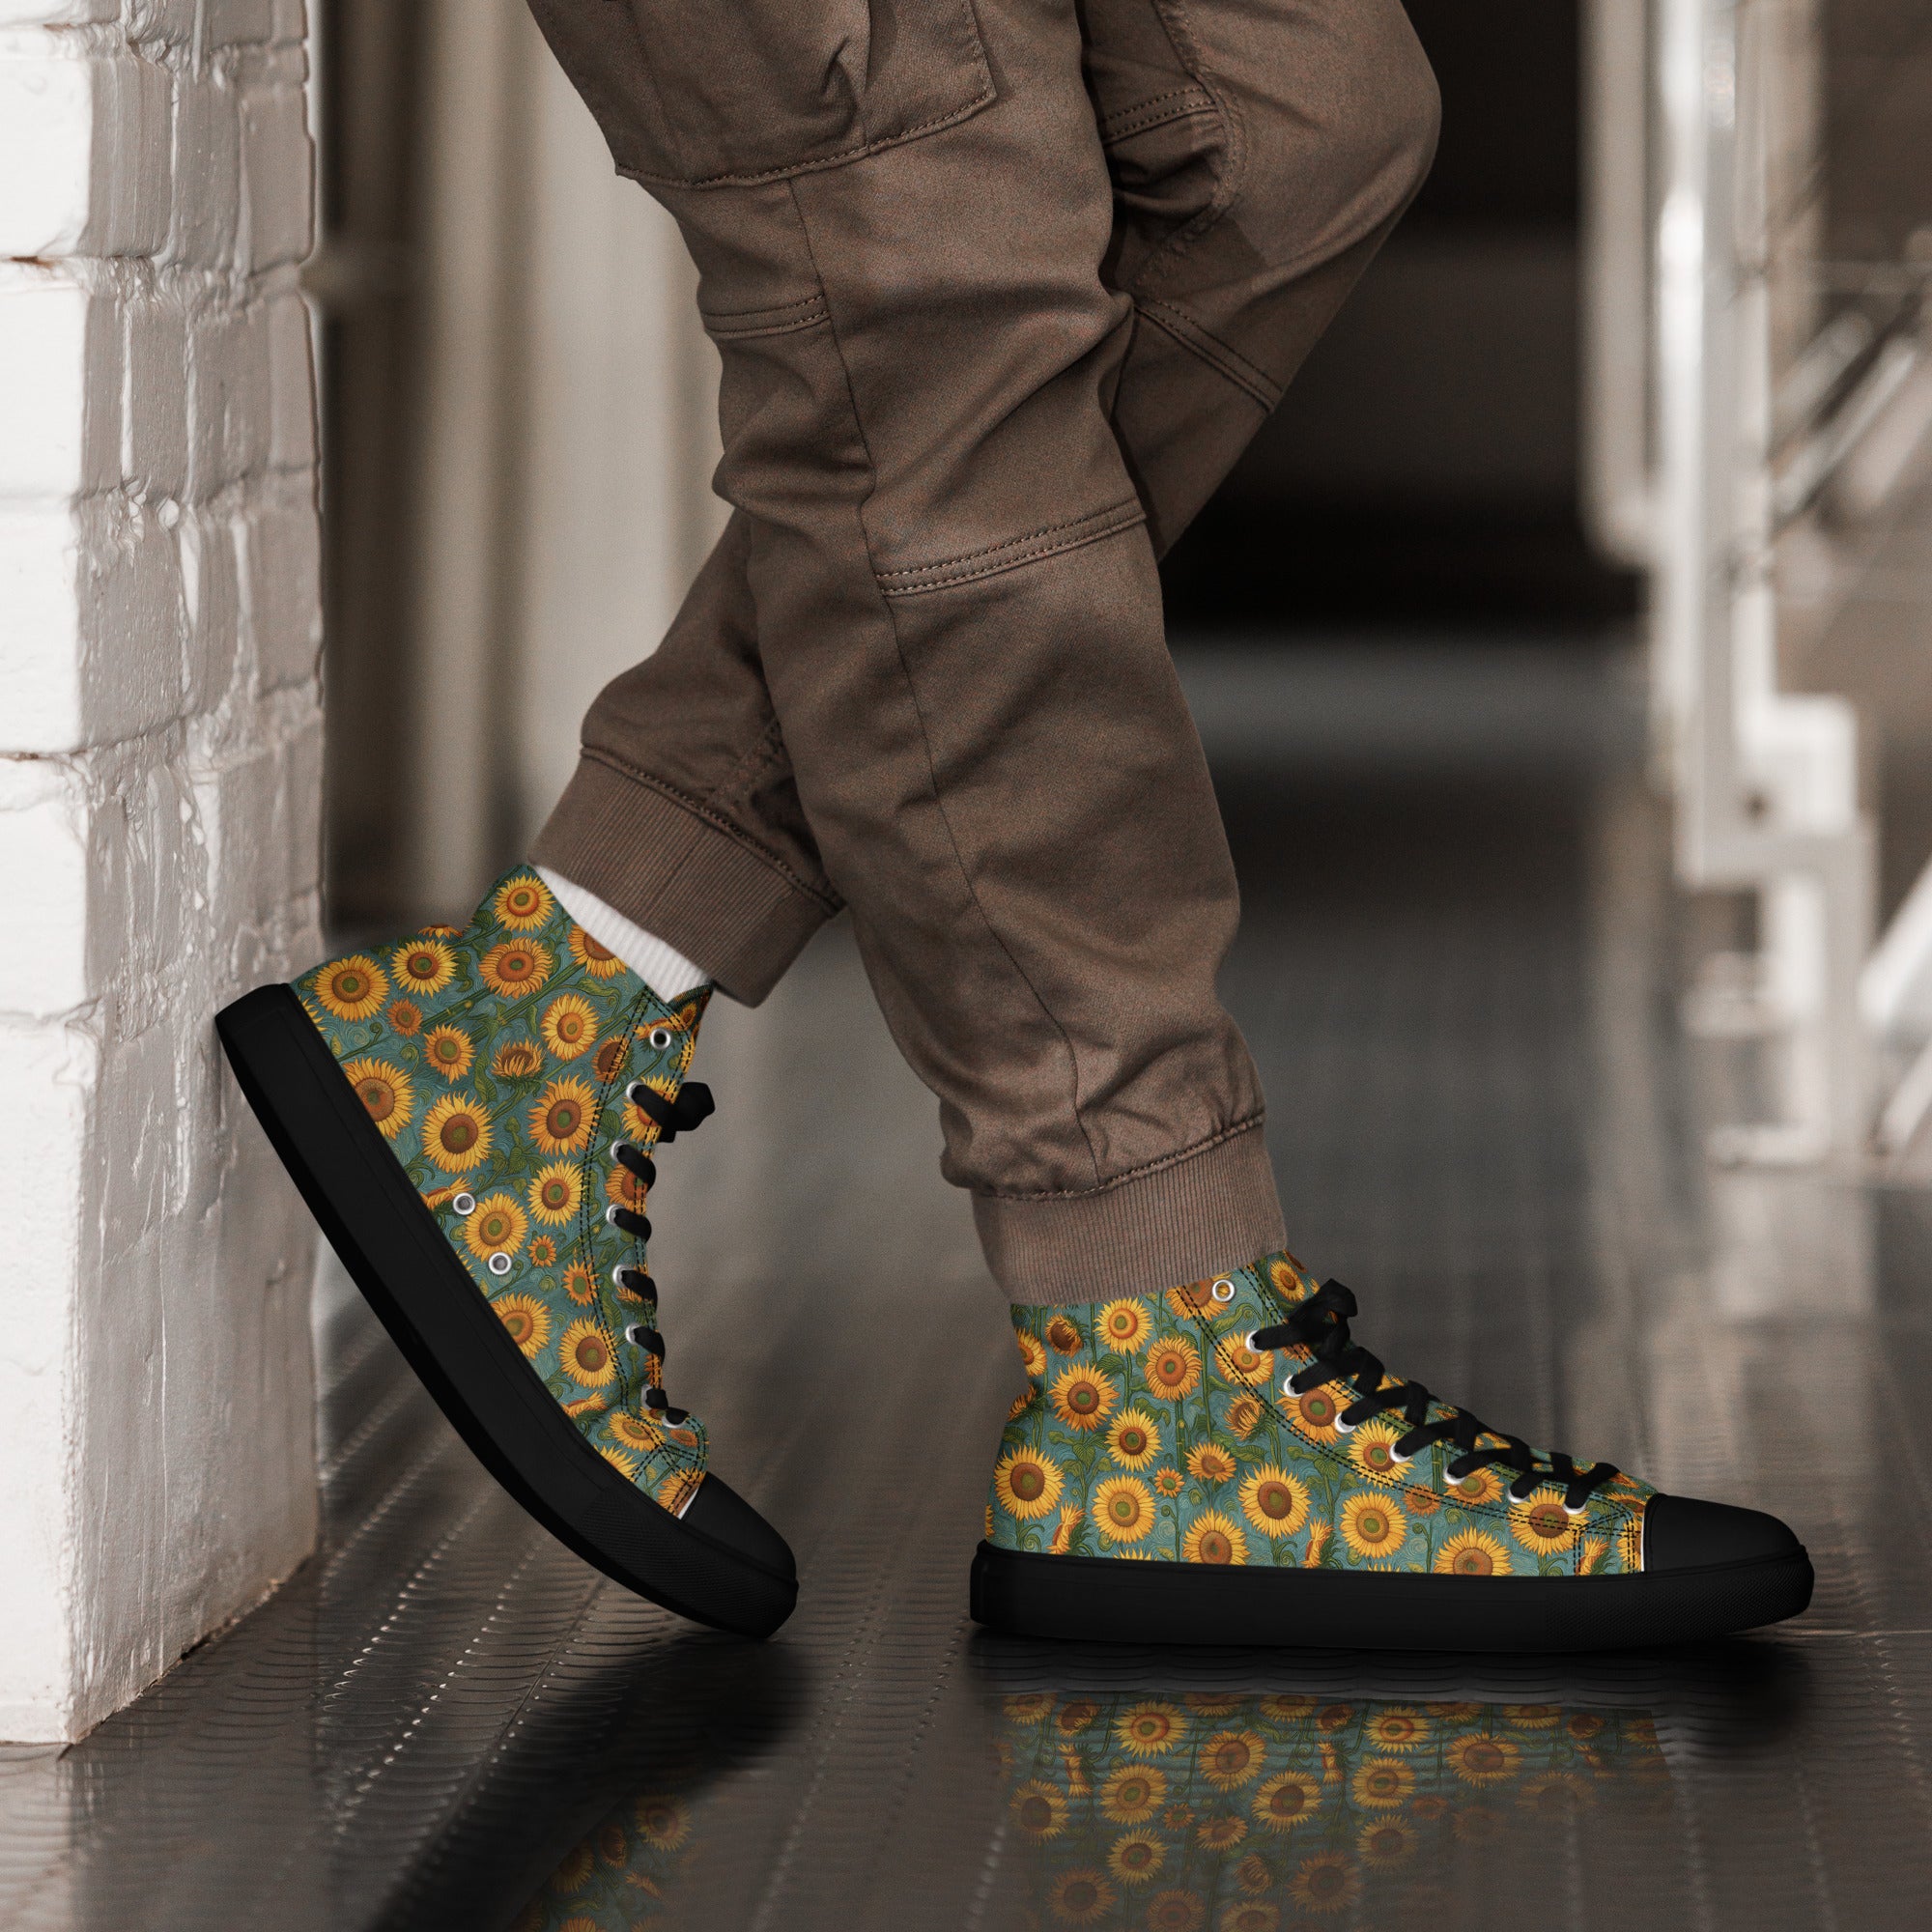 Vincent van Gogh 'Sunflowers' High Top Shoes | Premium Art High Top Sneakers for Men